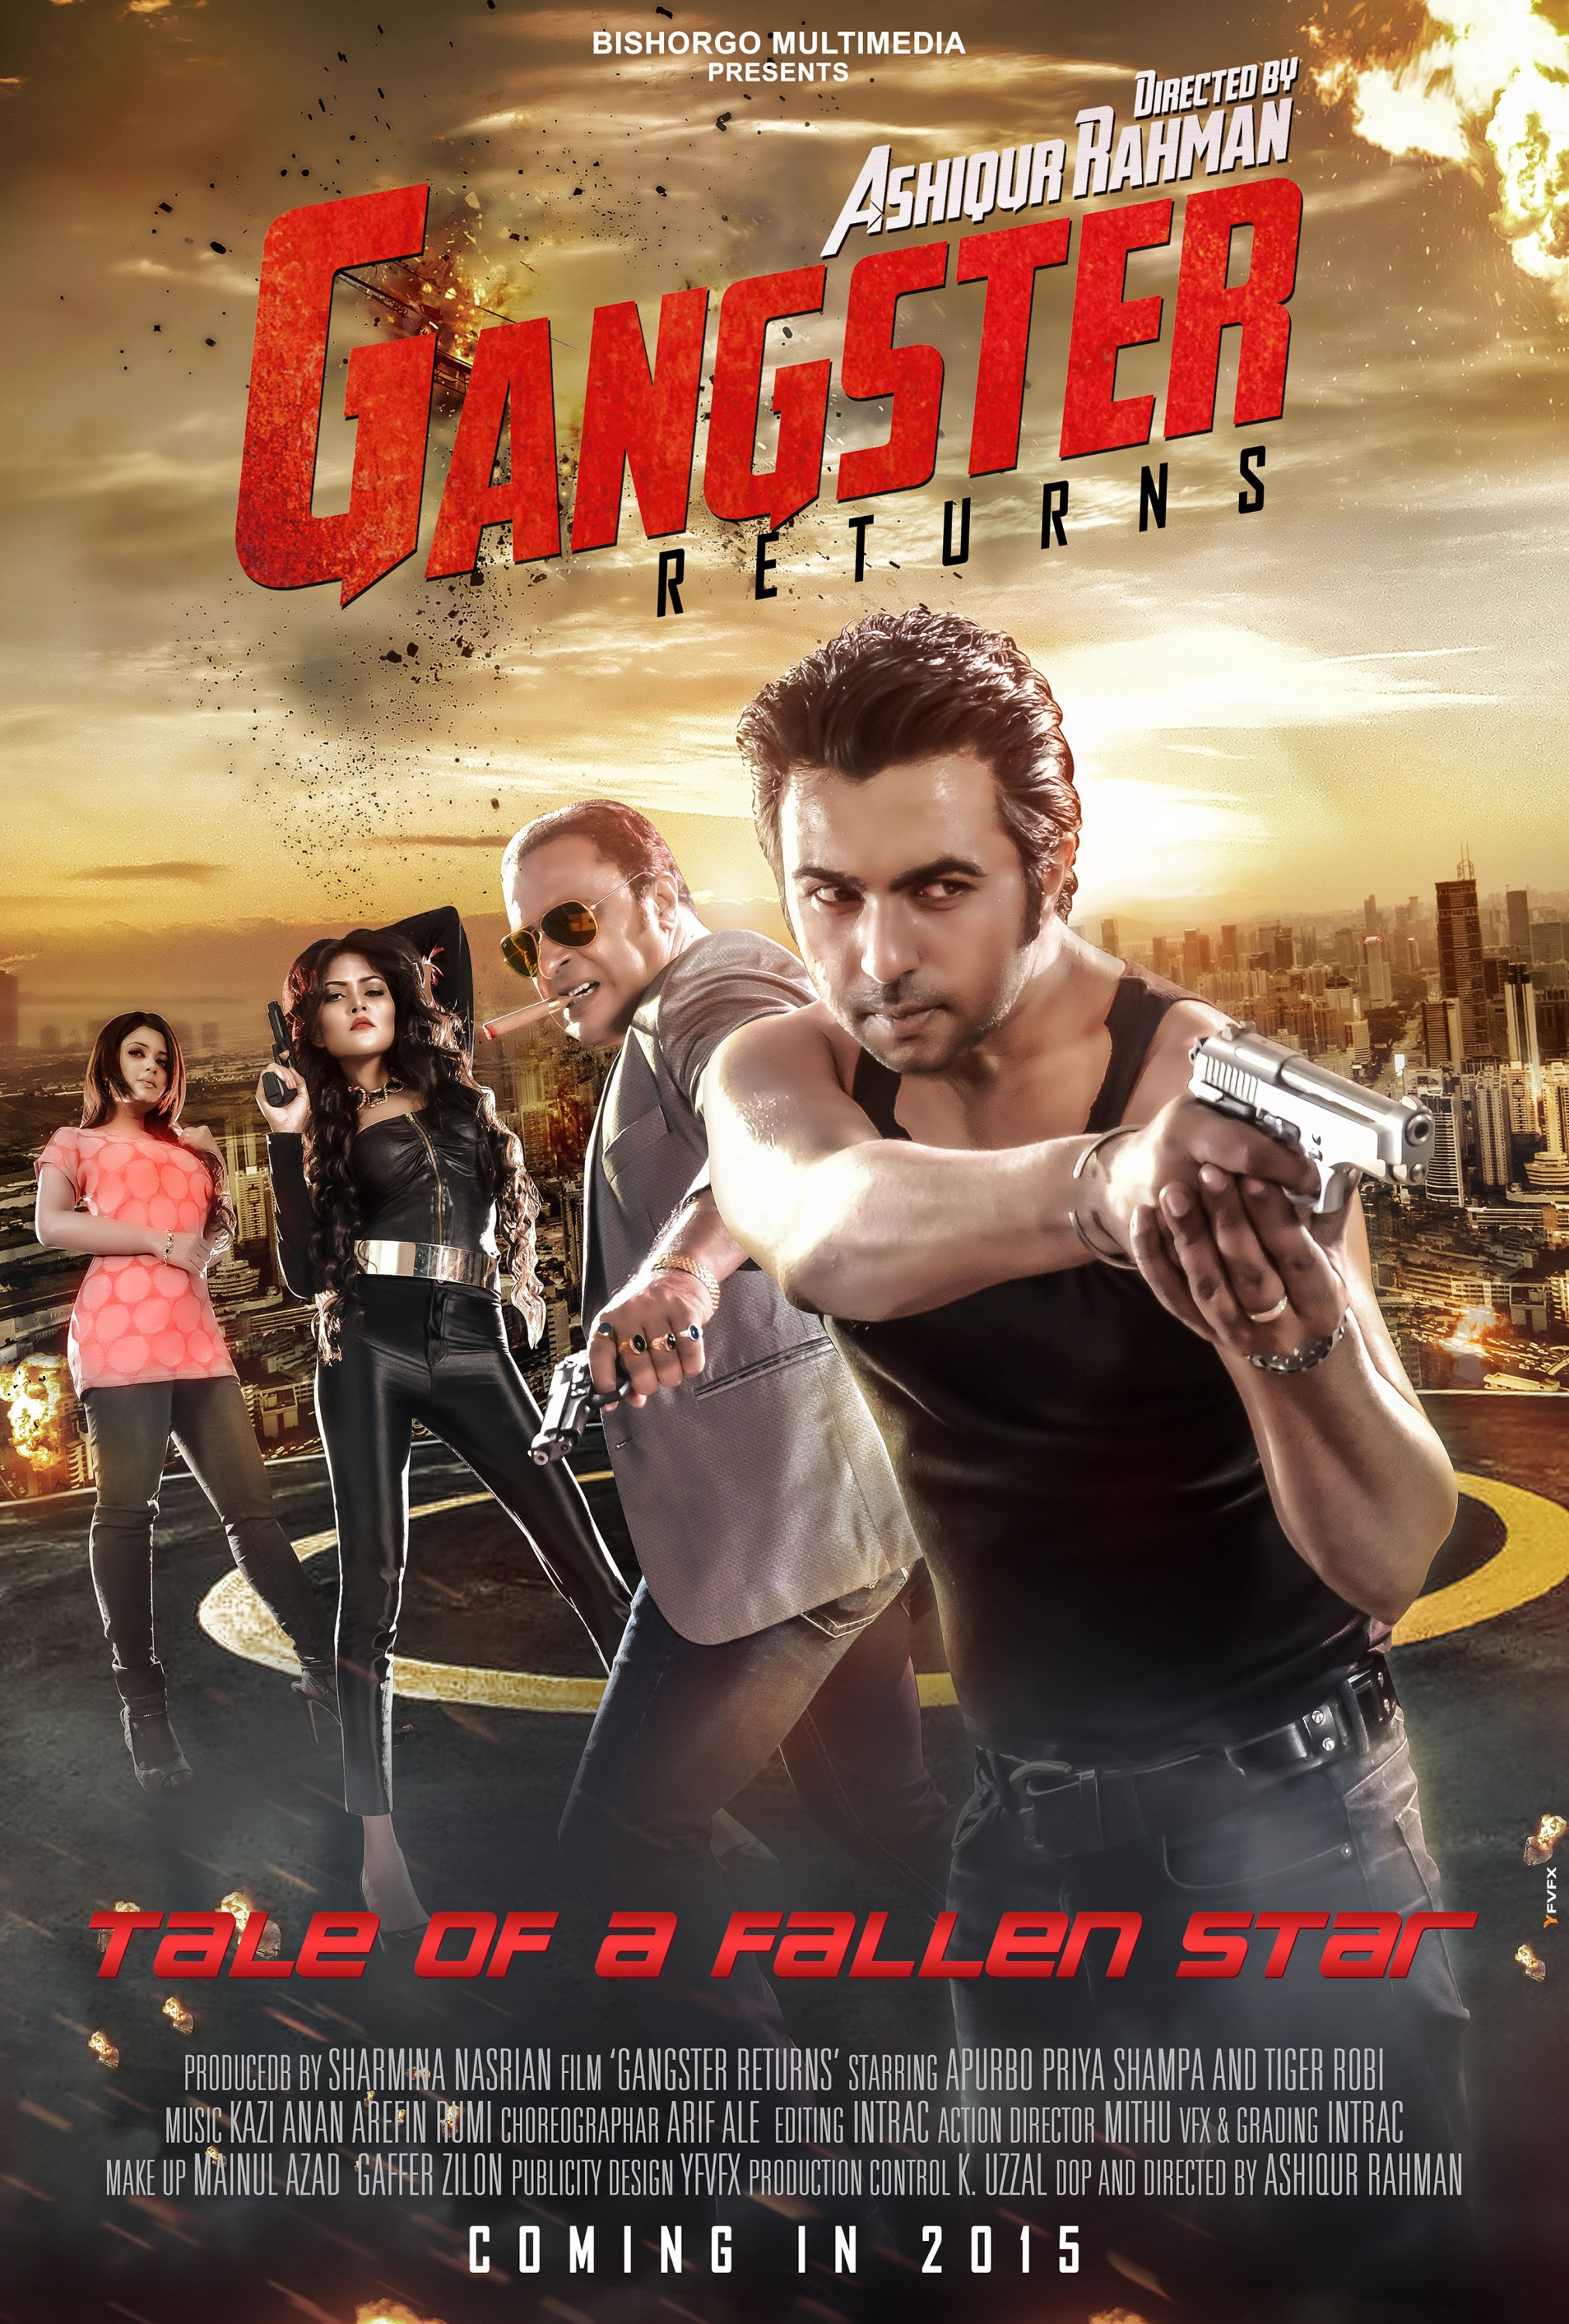 Mega Sized Movie Poster Image for Gangster Returns (#9 of 9)